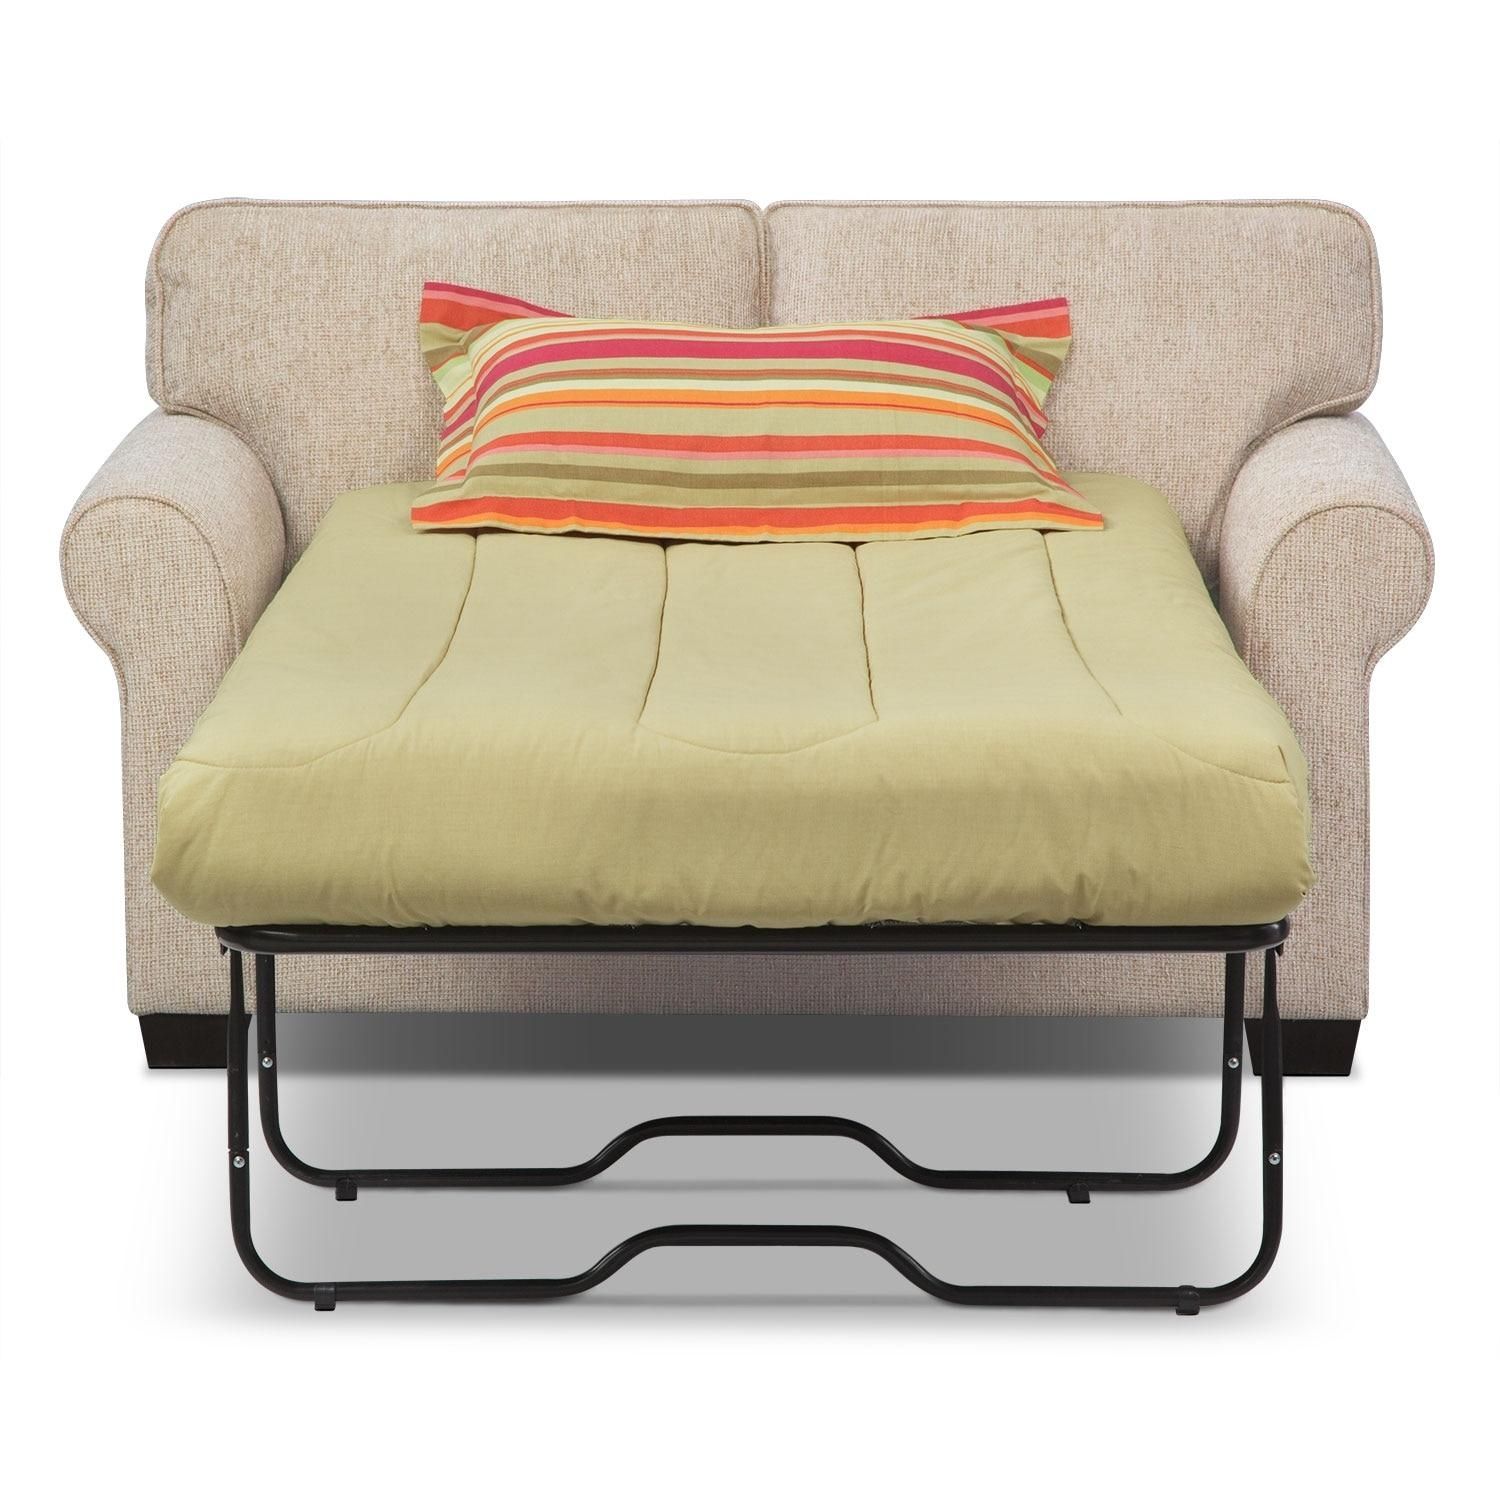 Fletcher Twin Innerspring Sleeper Sofa – Beige | Value City Furniture With Regard To Twin Sleeper Sofa Chairs (View 8 of 20)